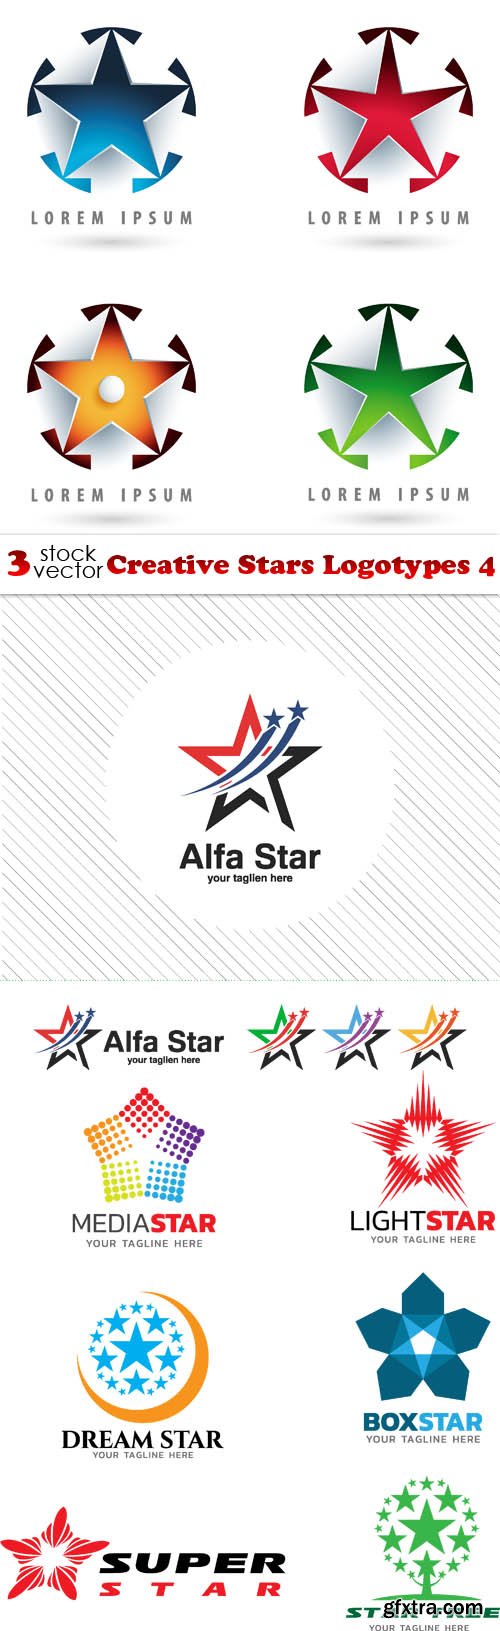 Vectors - Creative Stars Logotypes 4